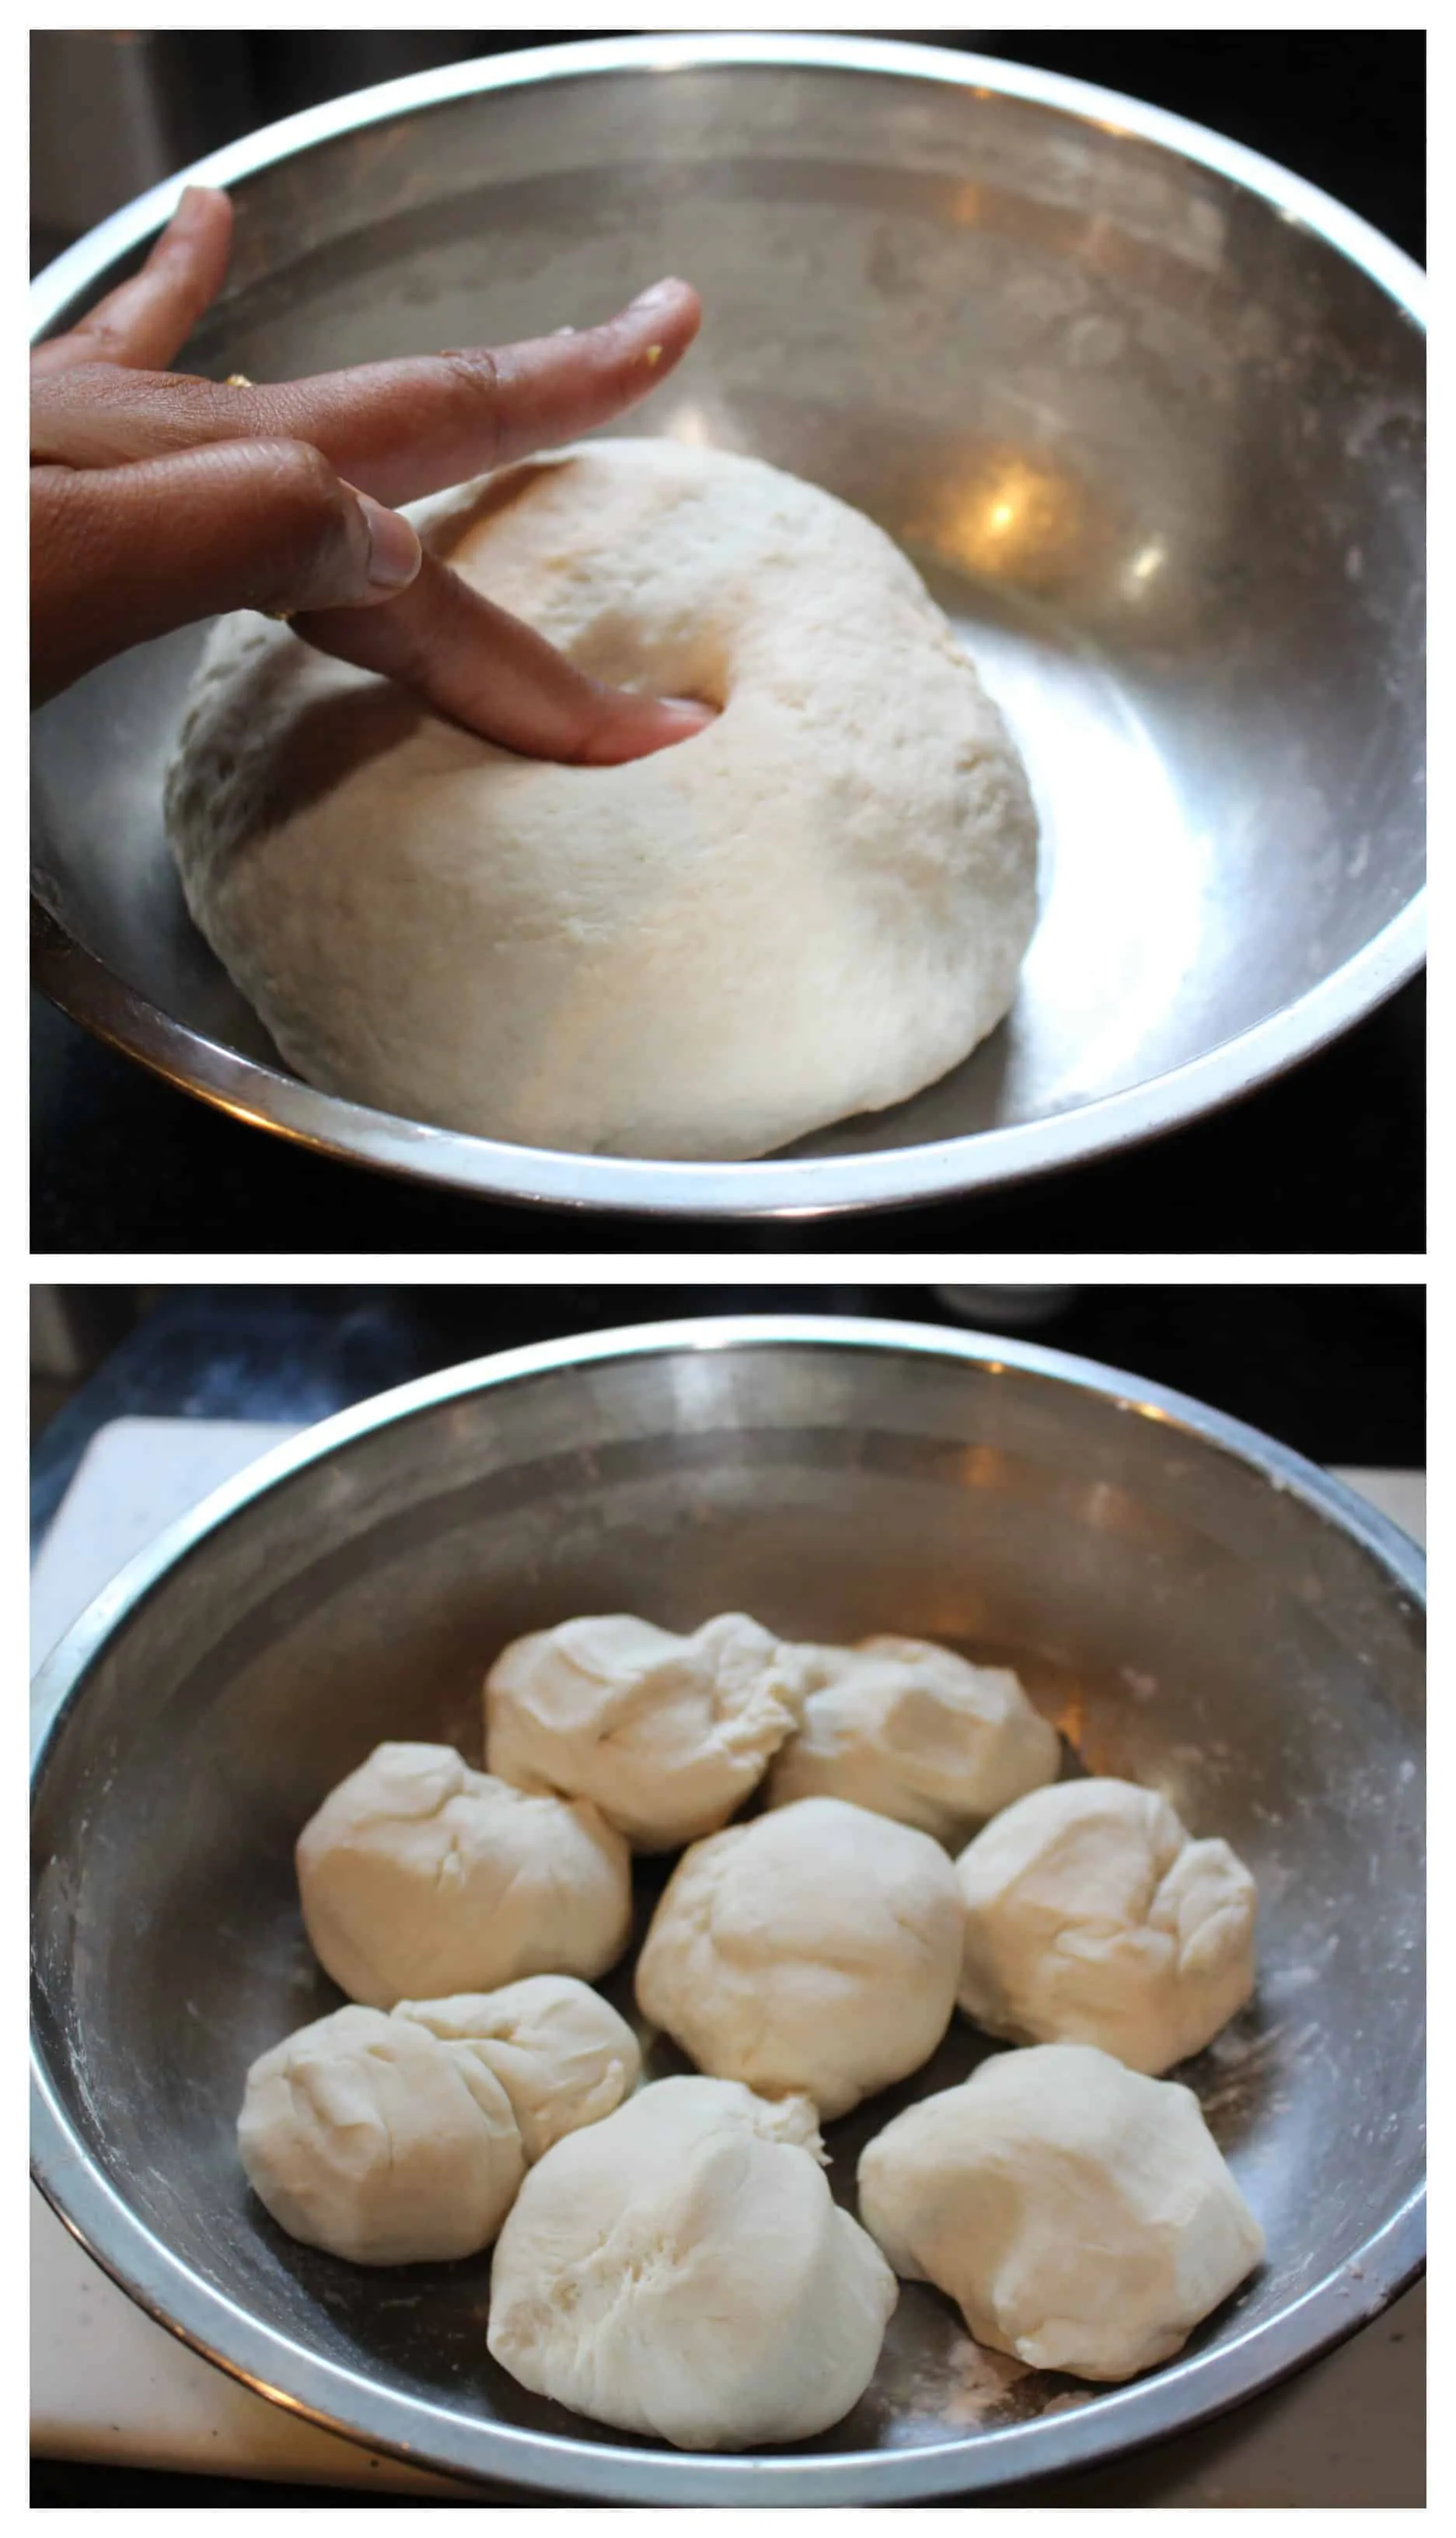 Splitting the dough in small balls